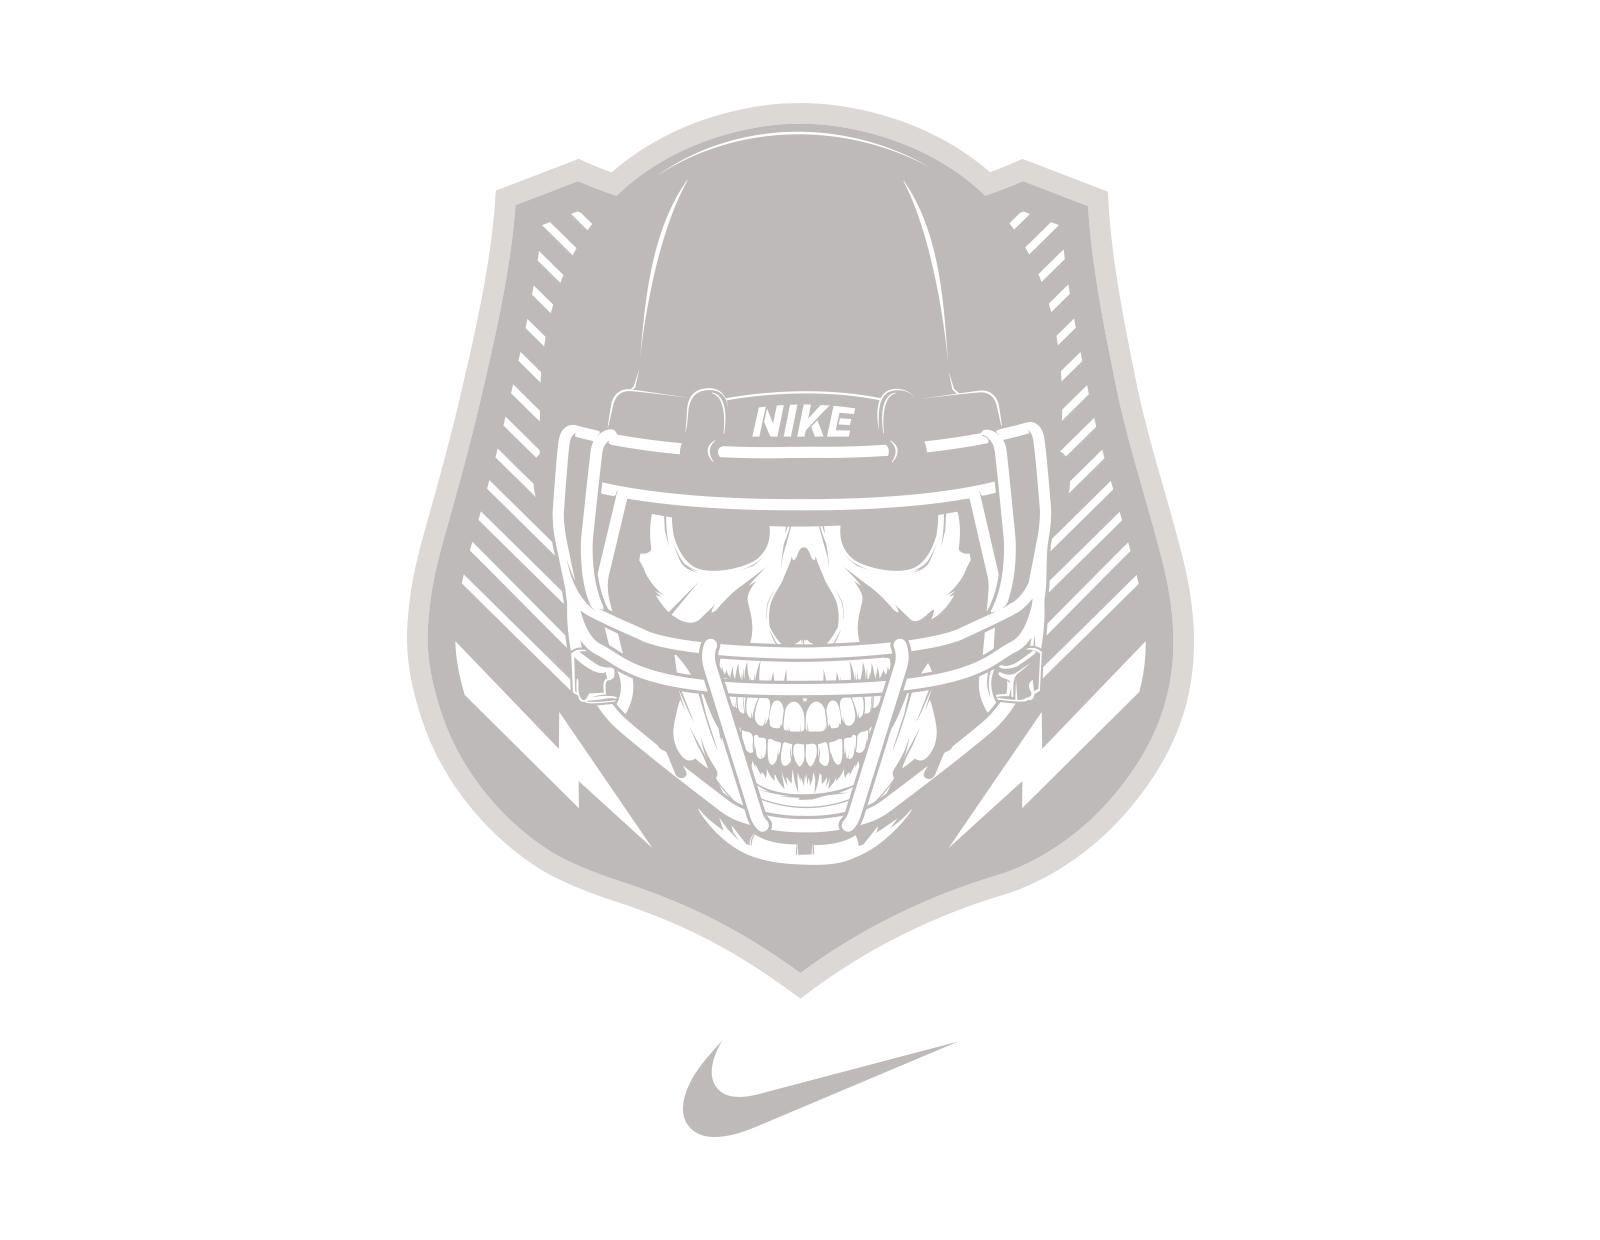 Black and White Nike Football Logo - Nike Football The Opening & Elite 11 Finals Showcase Top High School ...